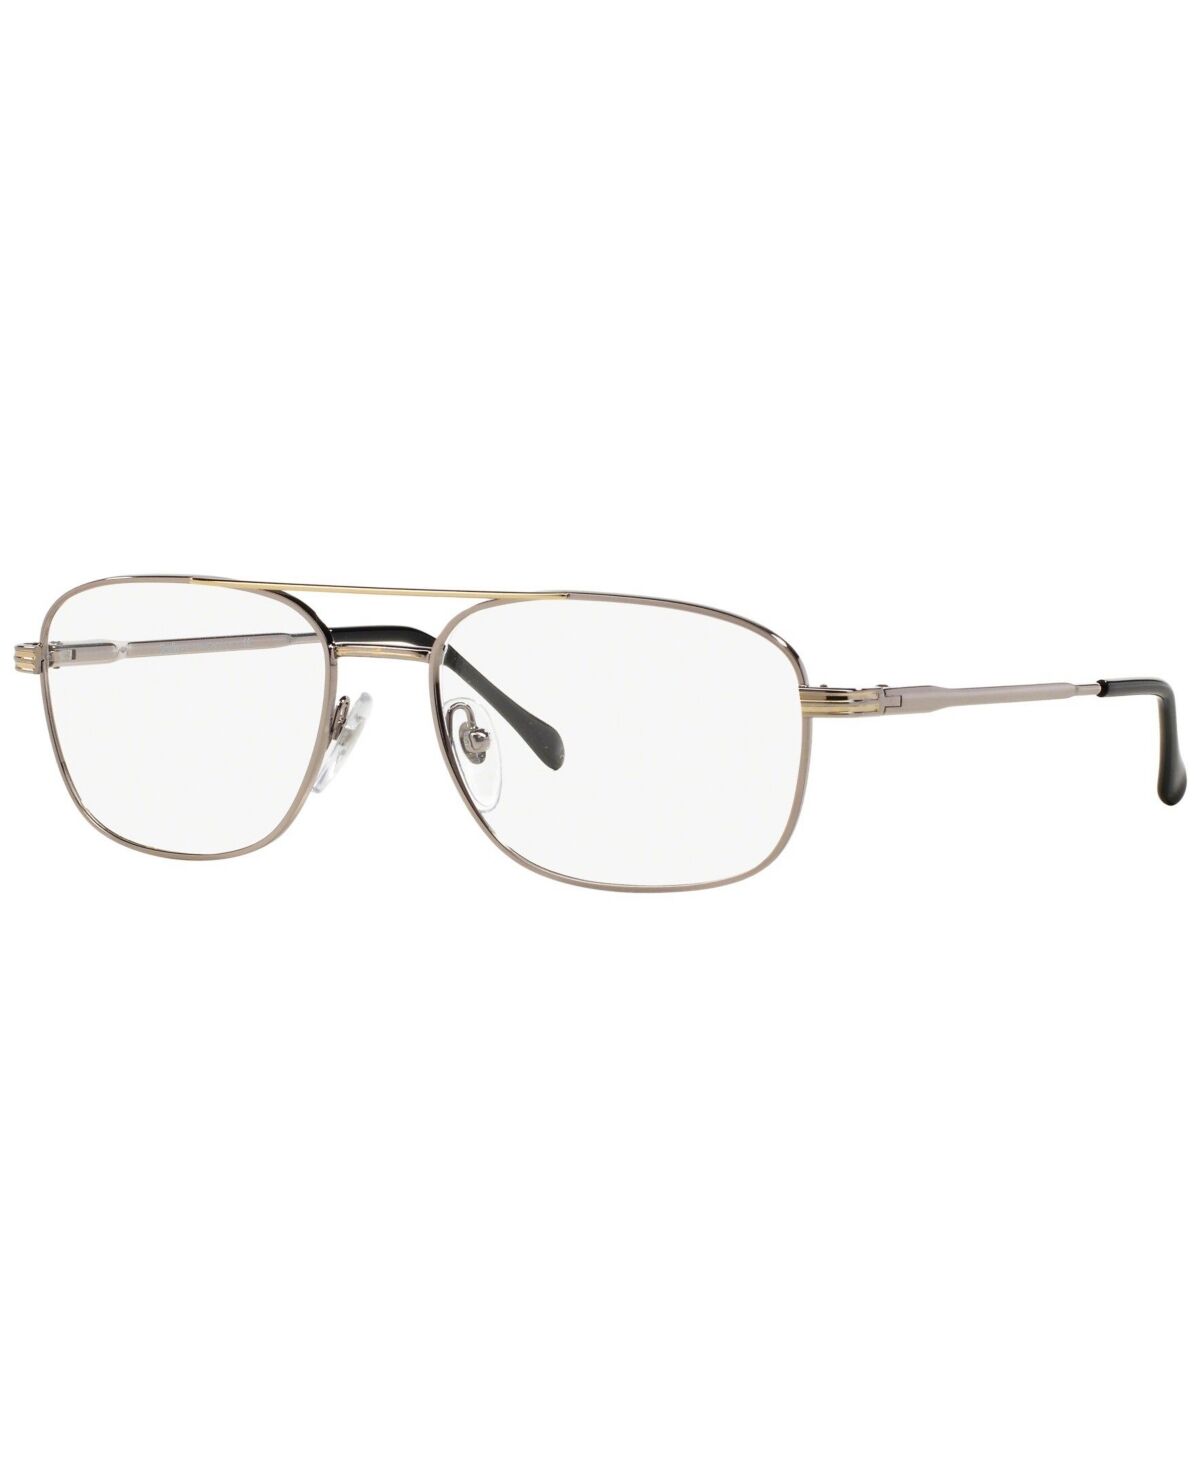 Sferoflex SF2152 Men's Square Eyeglasses - Silver Gold